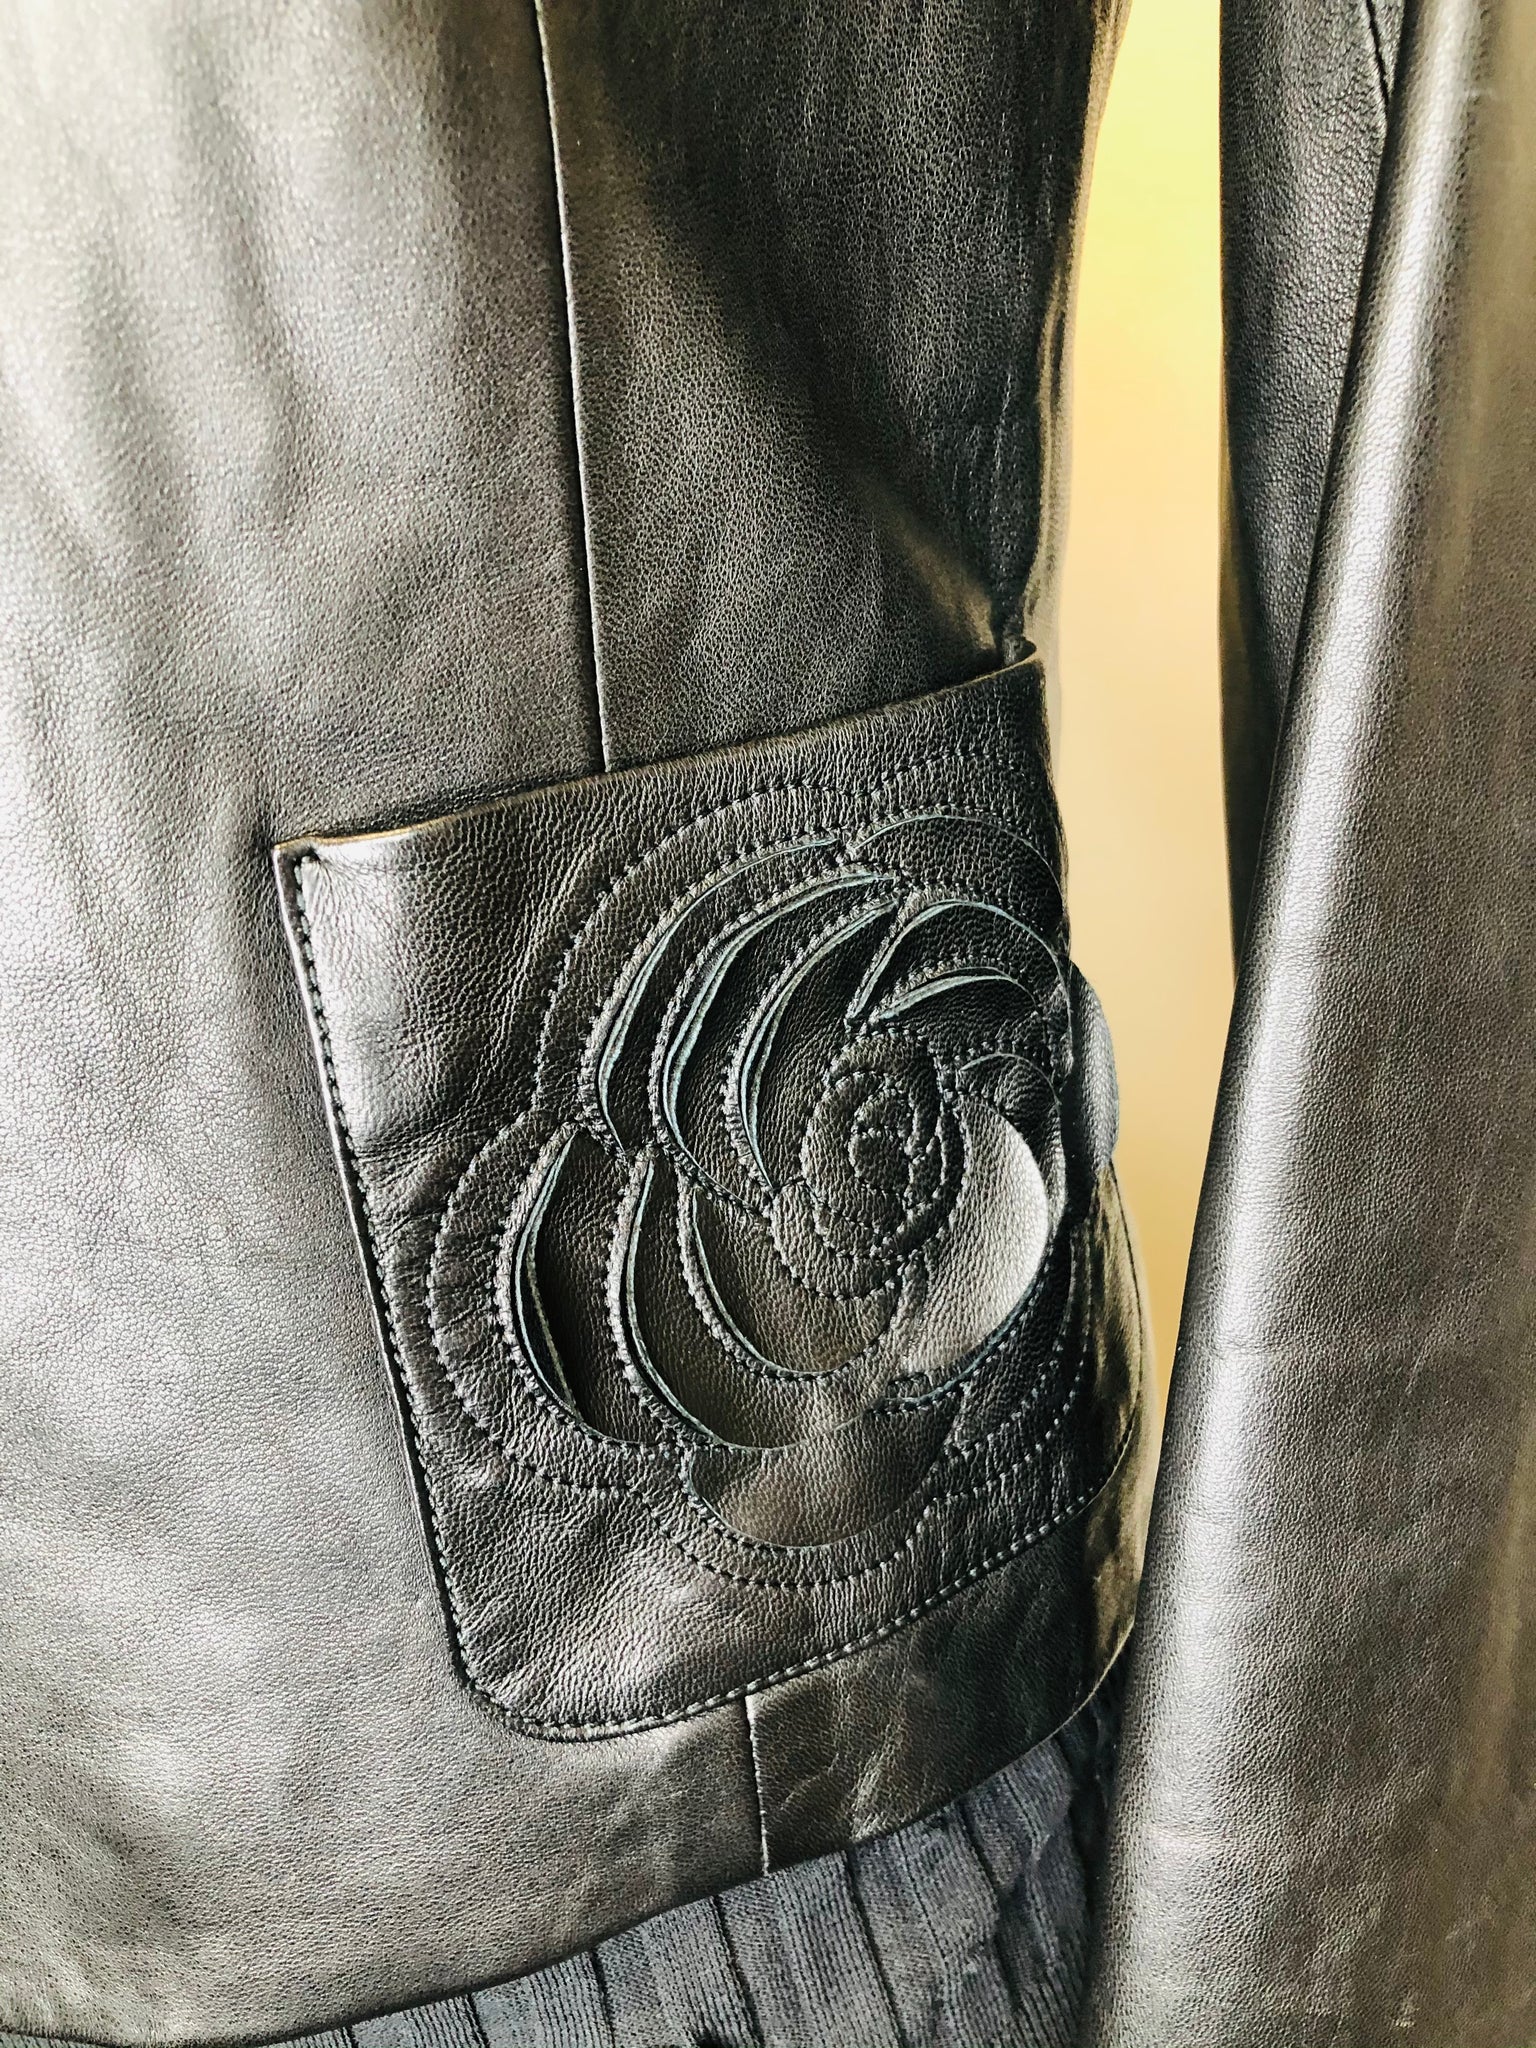 CHANEL Black Lambskin Camellia Embroidered Jacket Size 36 – JDEX